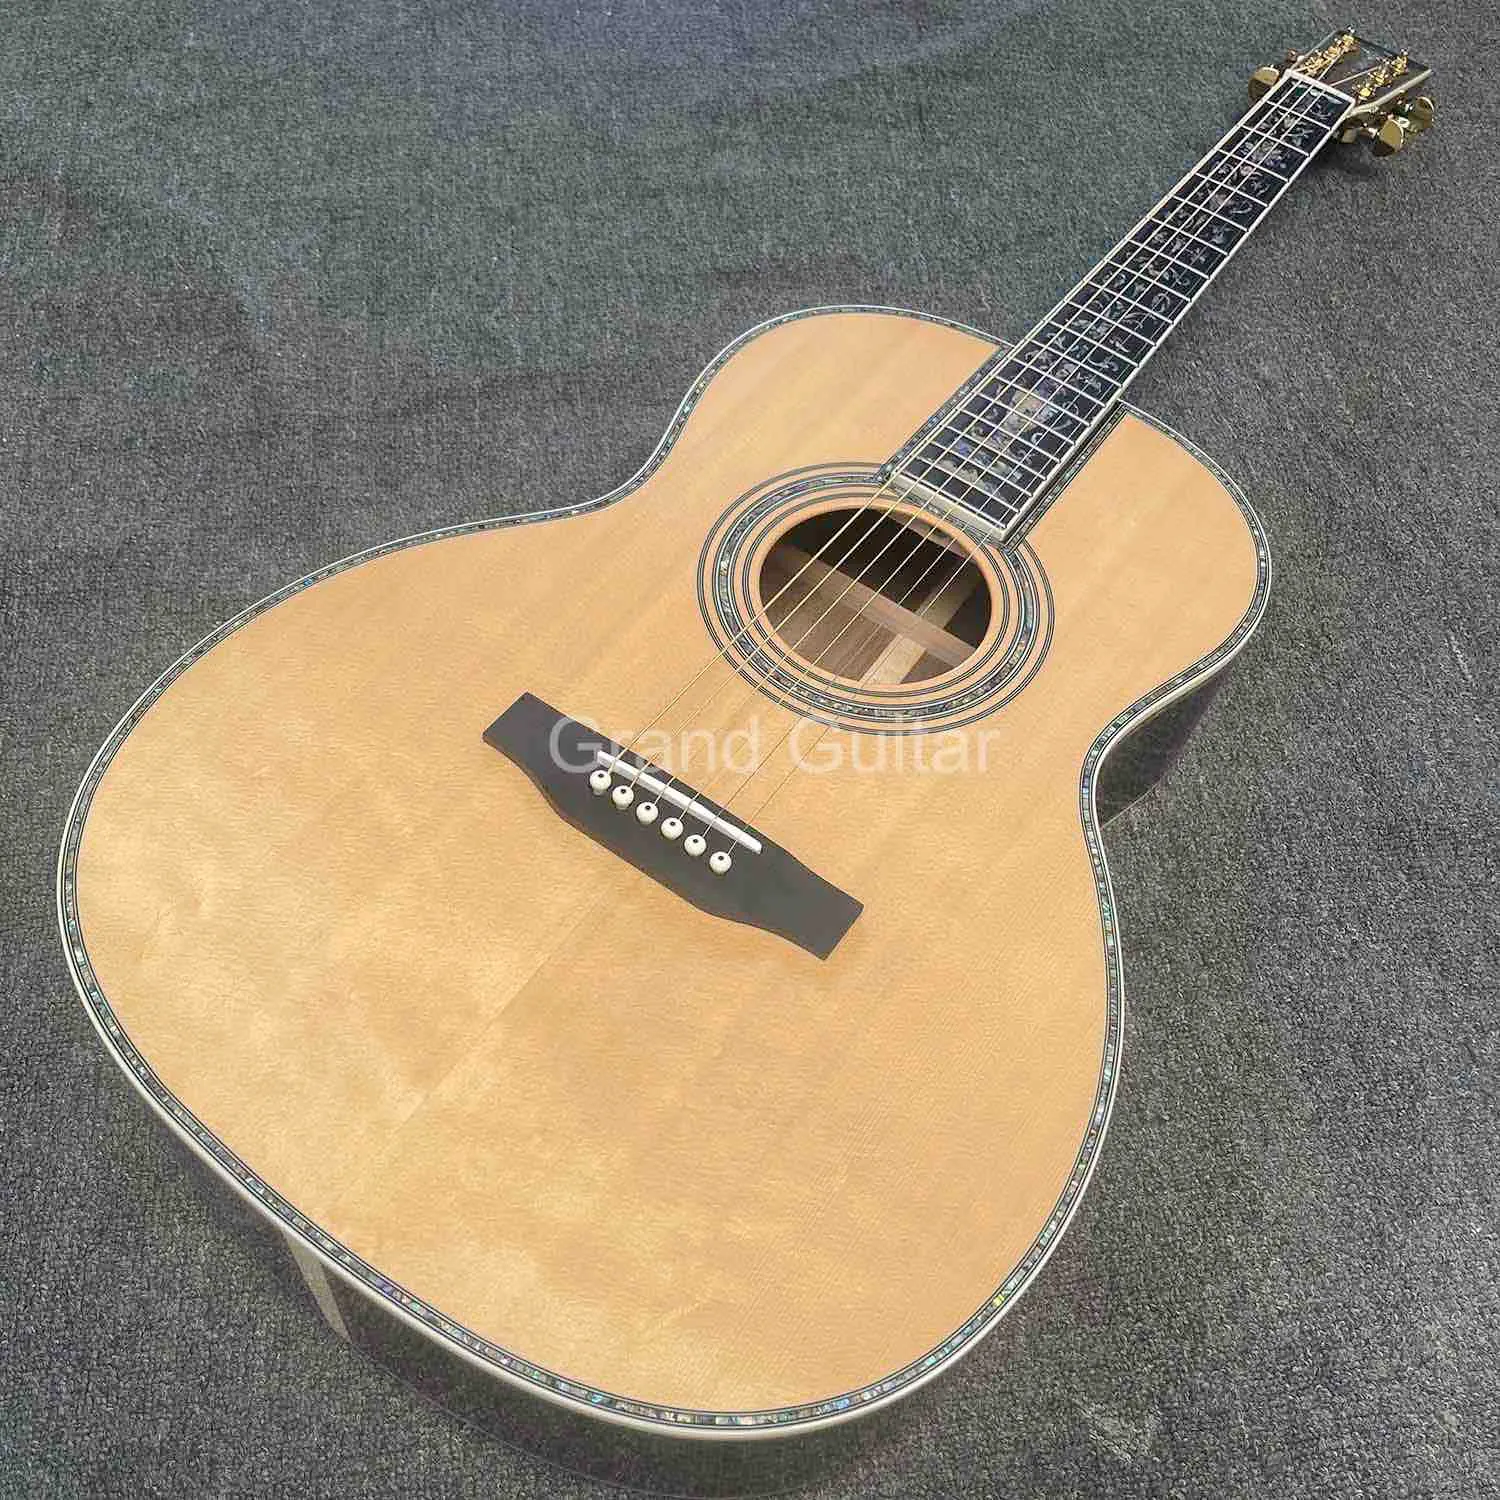 Solid Europe Spruce Wood 39 tum akustisk gitarr Ooo Body Style Life Tree Inlay Classic Folk Guitar Abalone Binding